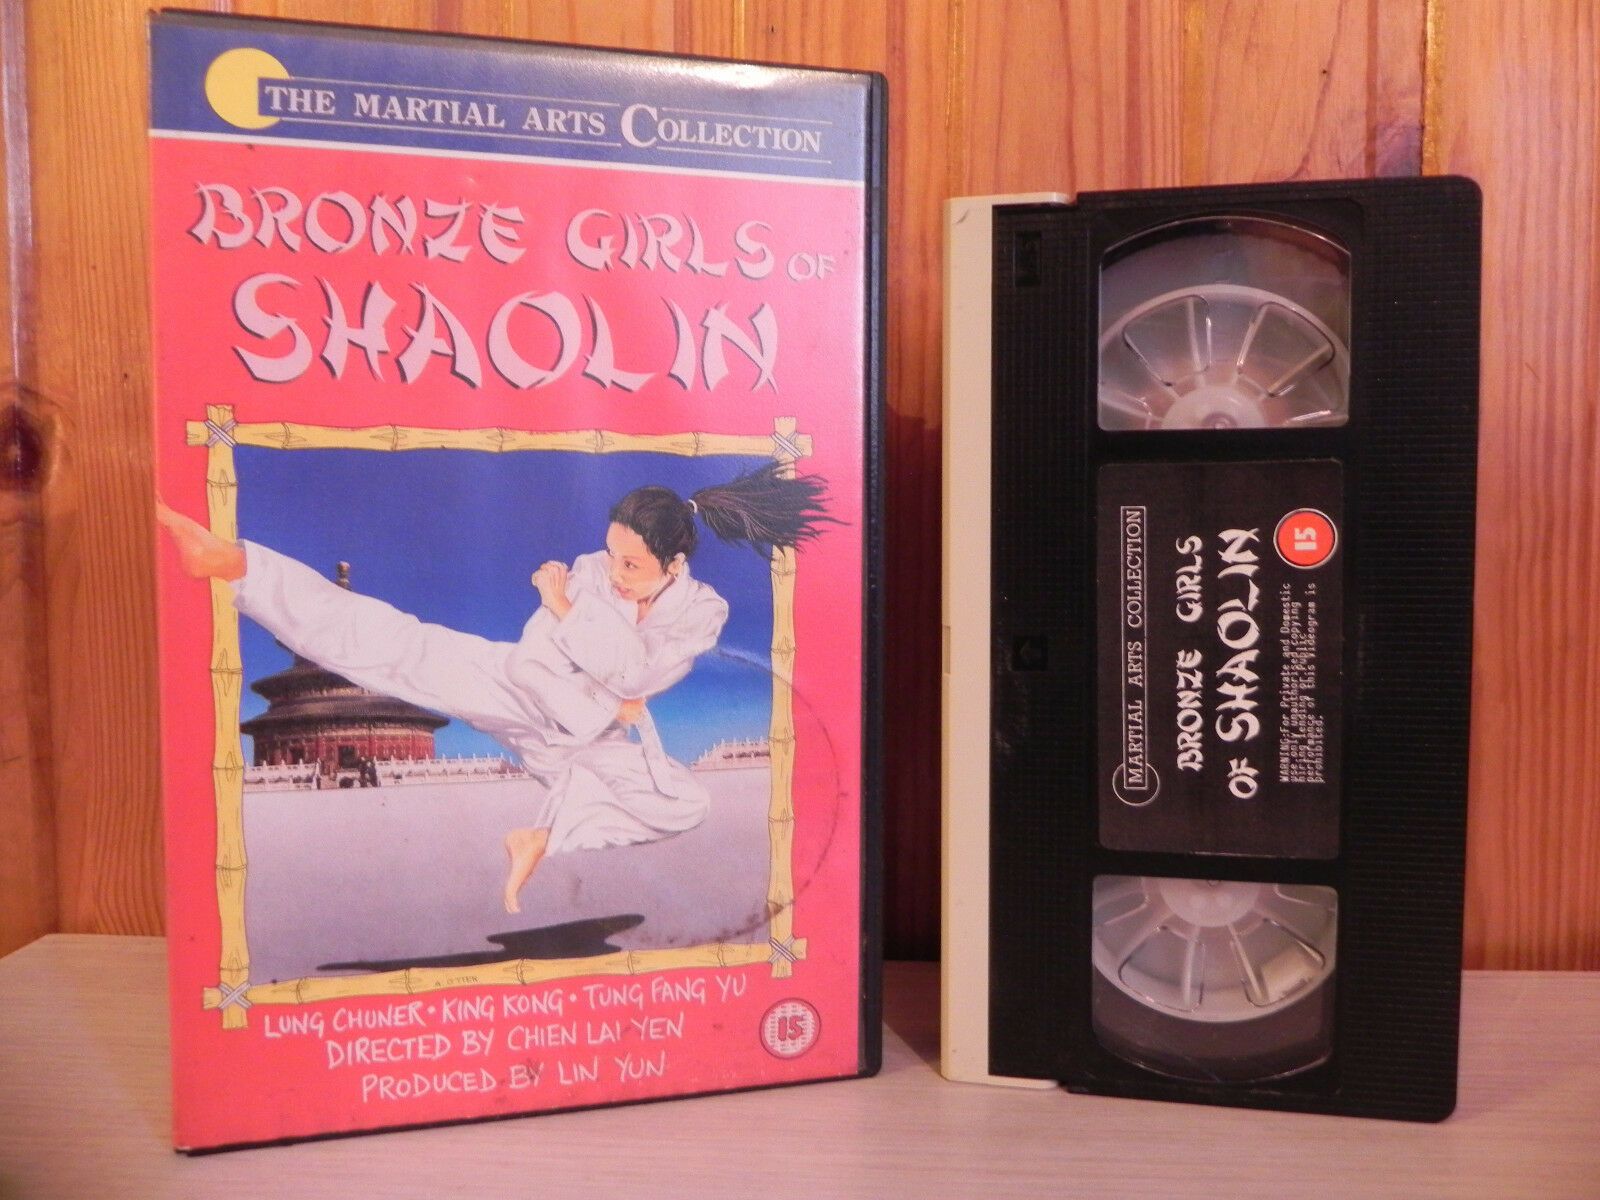 Bronze Girls Of Shaolin - Lunk Chuner - King Kong - Kung-Fu - Big Box - VHS-